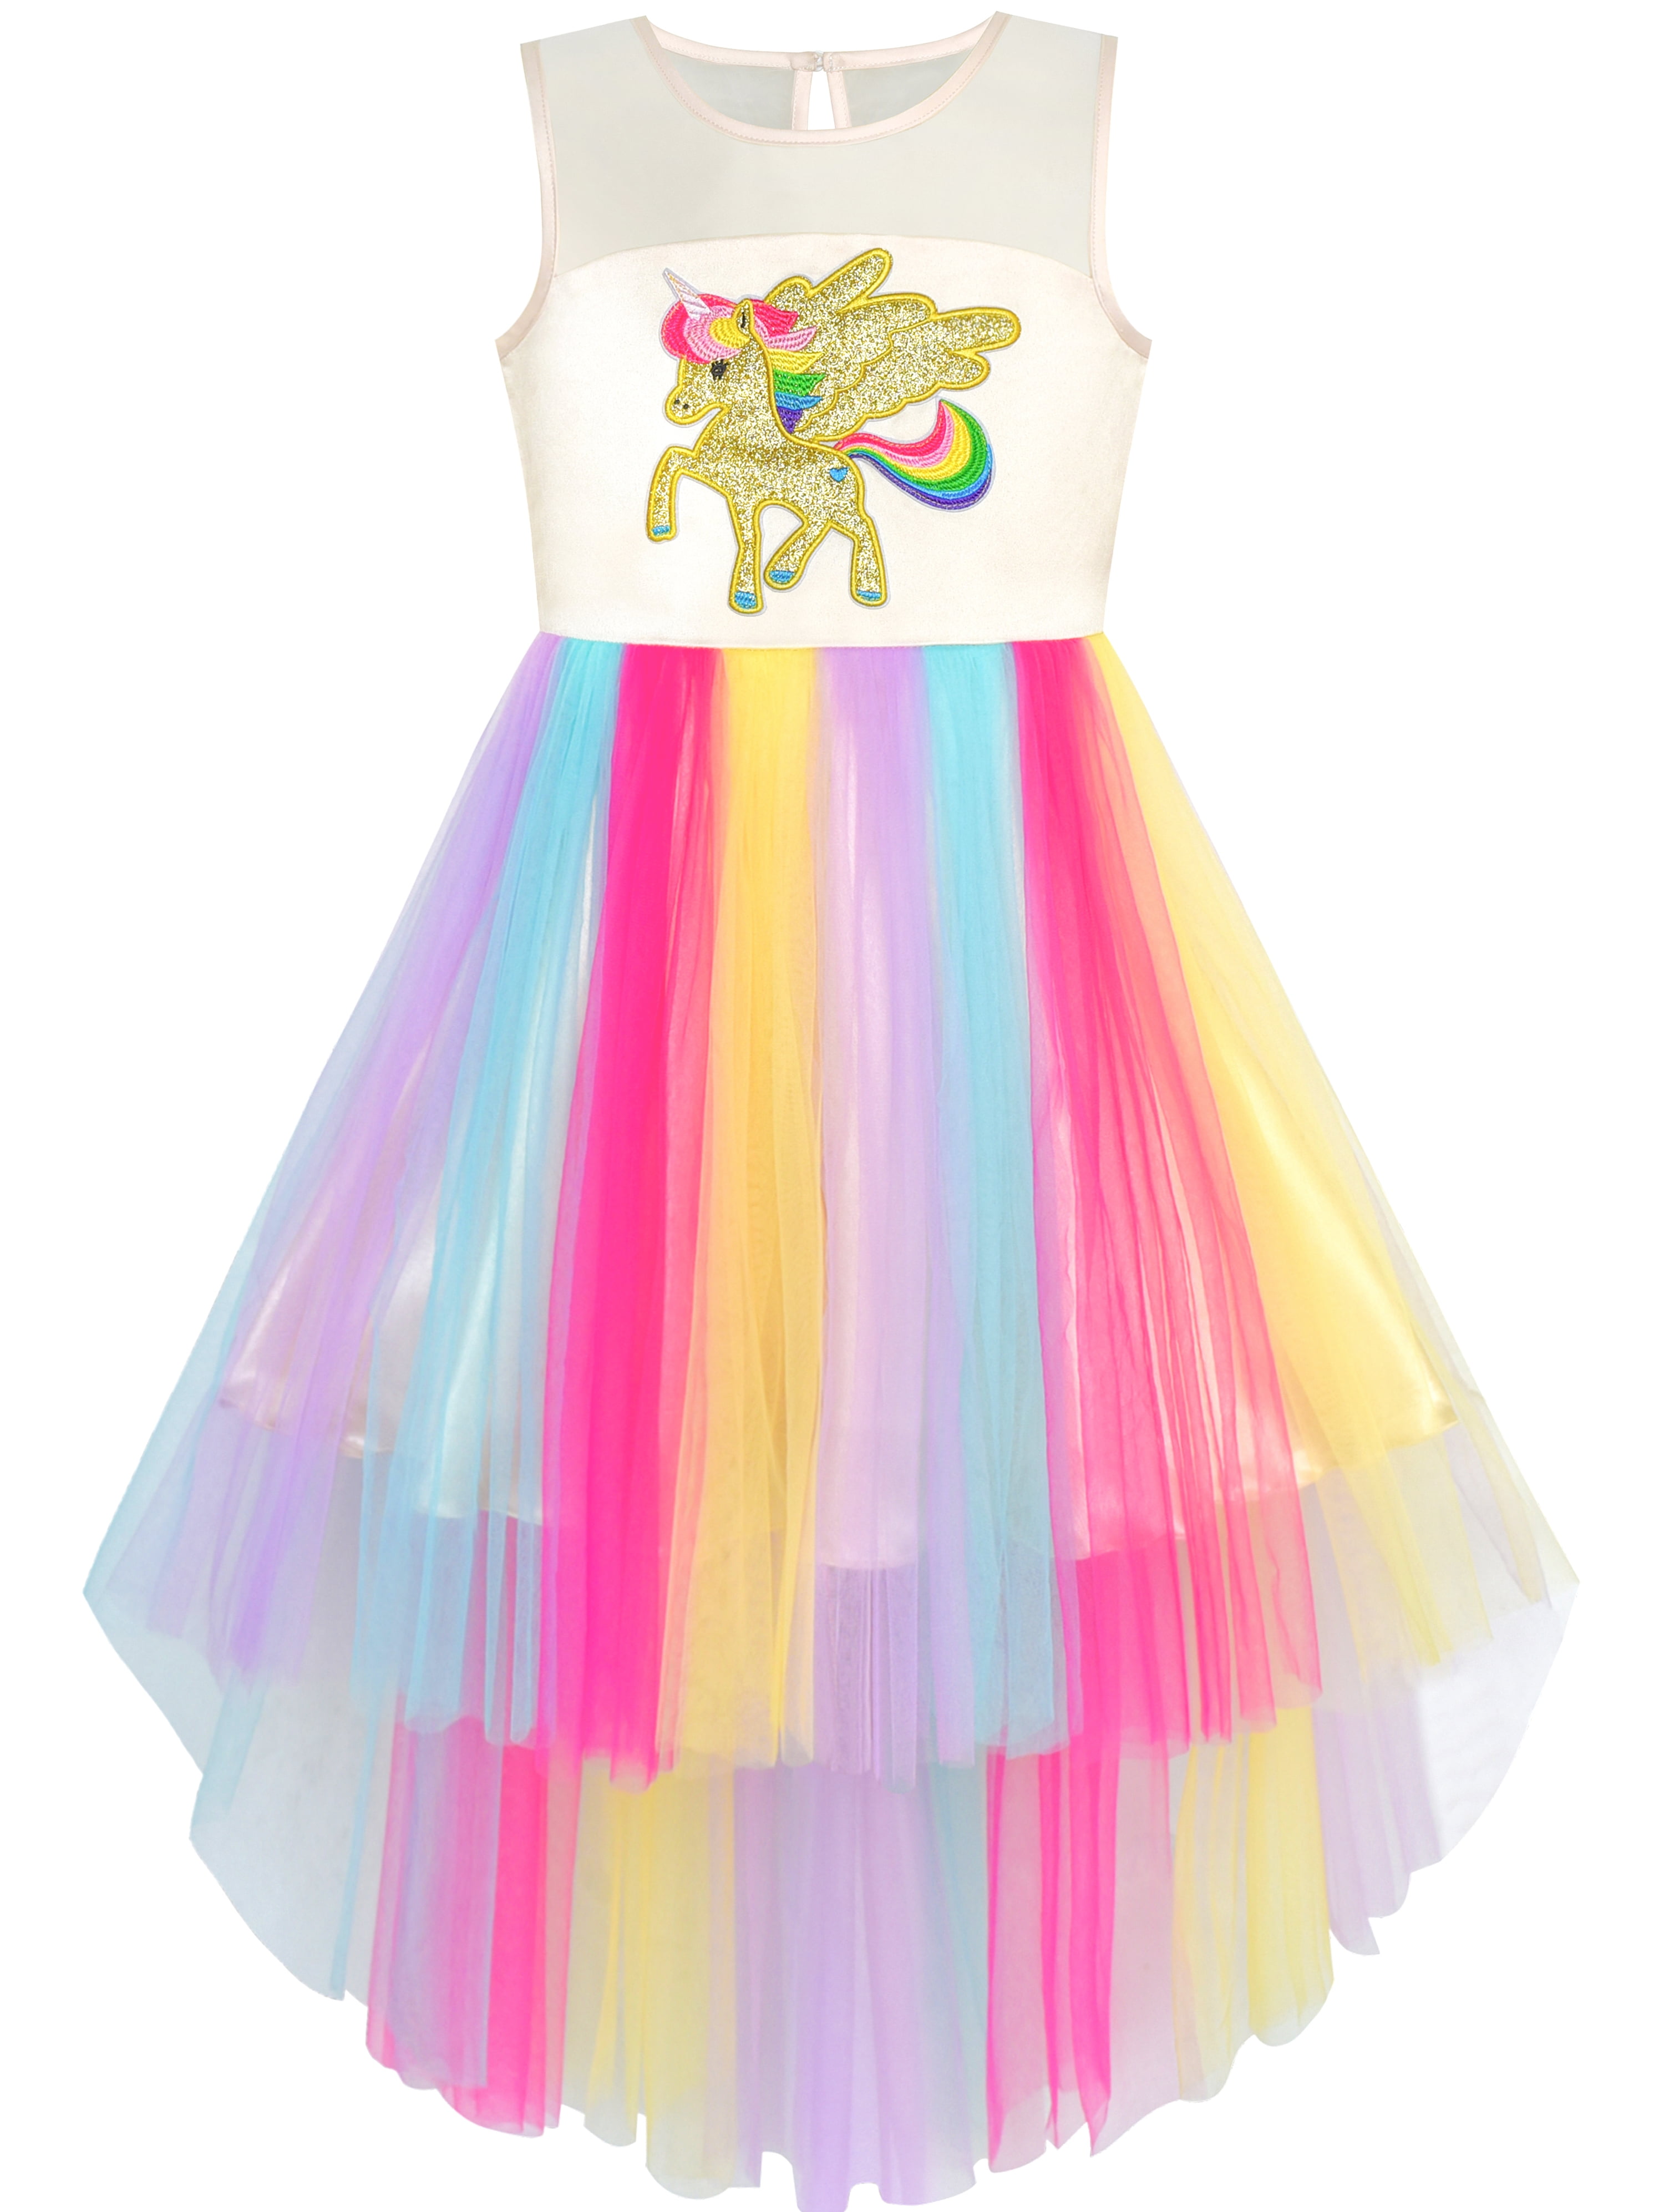 New Rainbow unicorn appliqué dress aged 6-7 years last in stock 